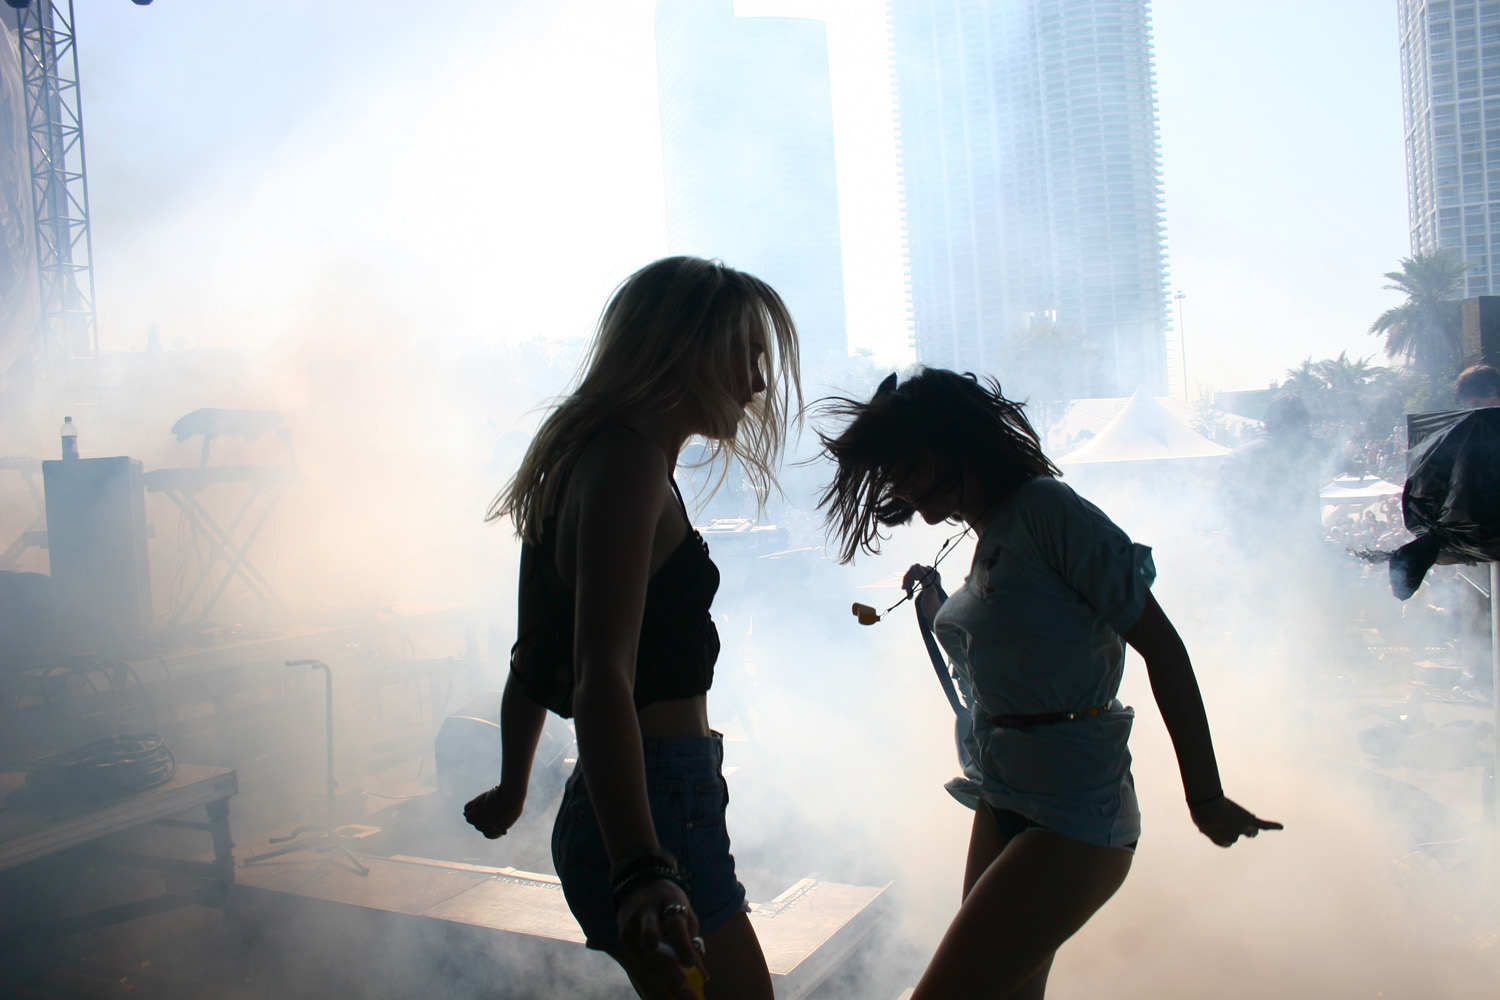 Ultra Music Festival in Miami on March 27, 2010